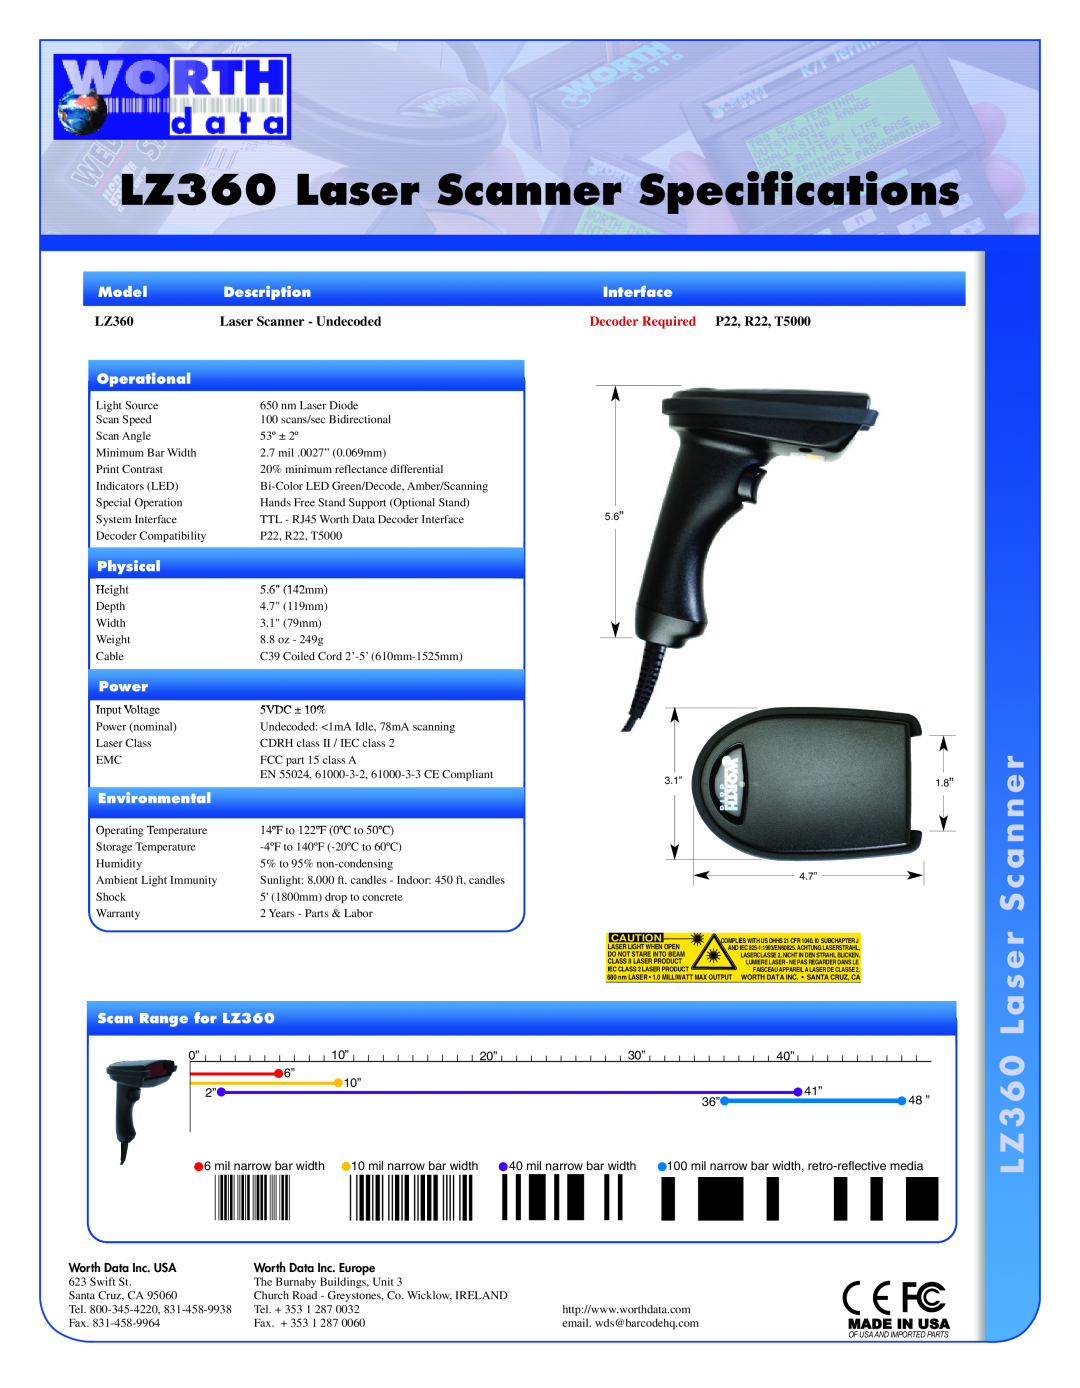 Worth Data C446 specifications LZ360 Laser Scanner Specifications, a s e r S c a n n e r, L Z 3 6 0 L, Model, Description 